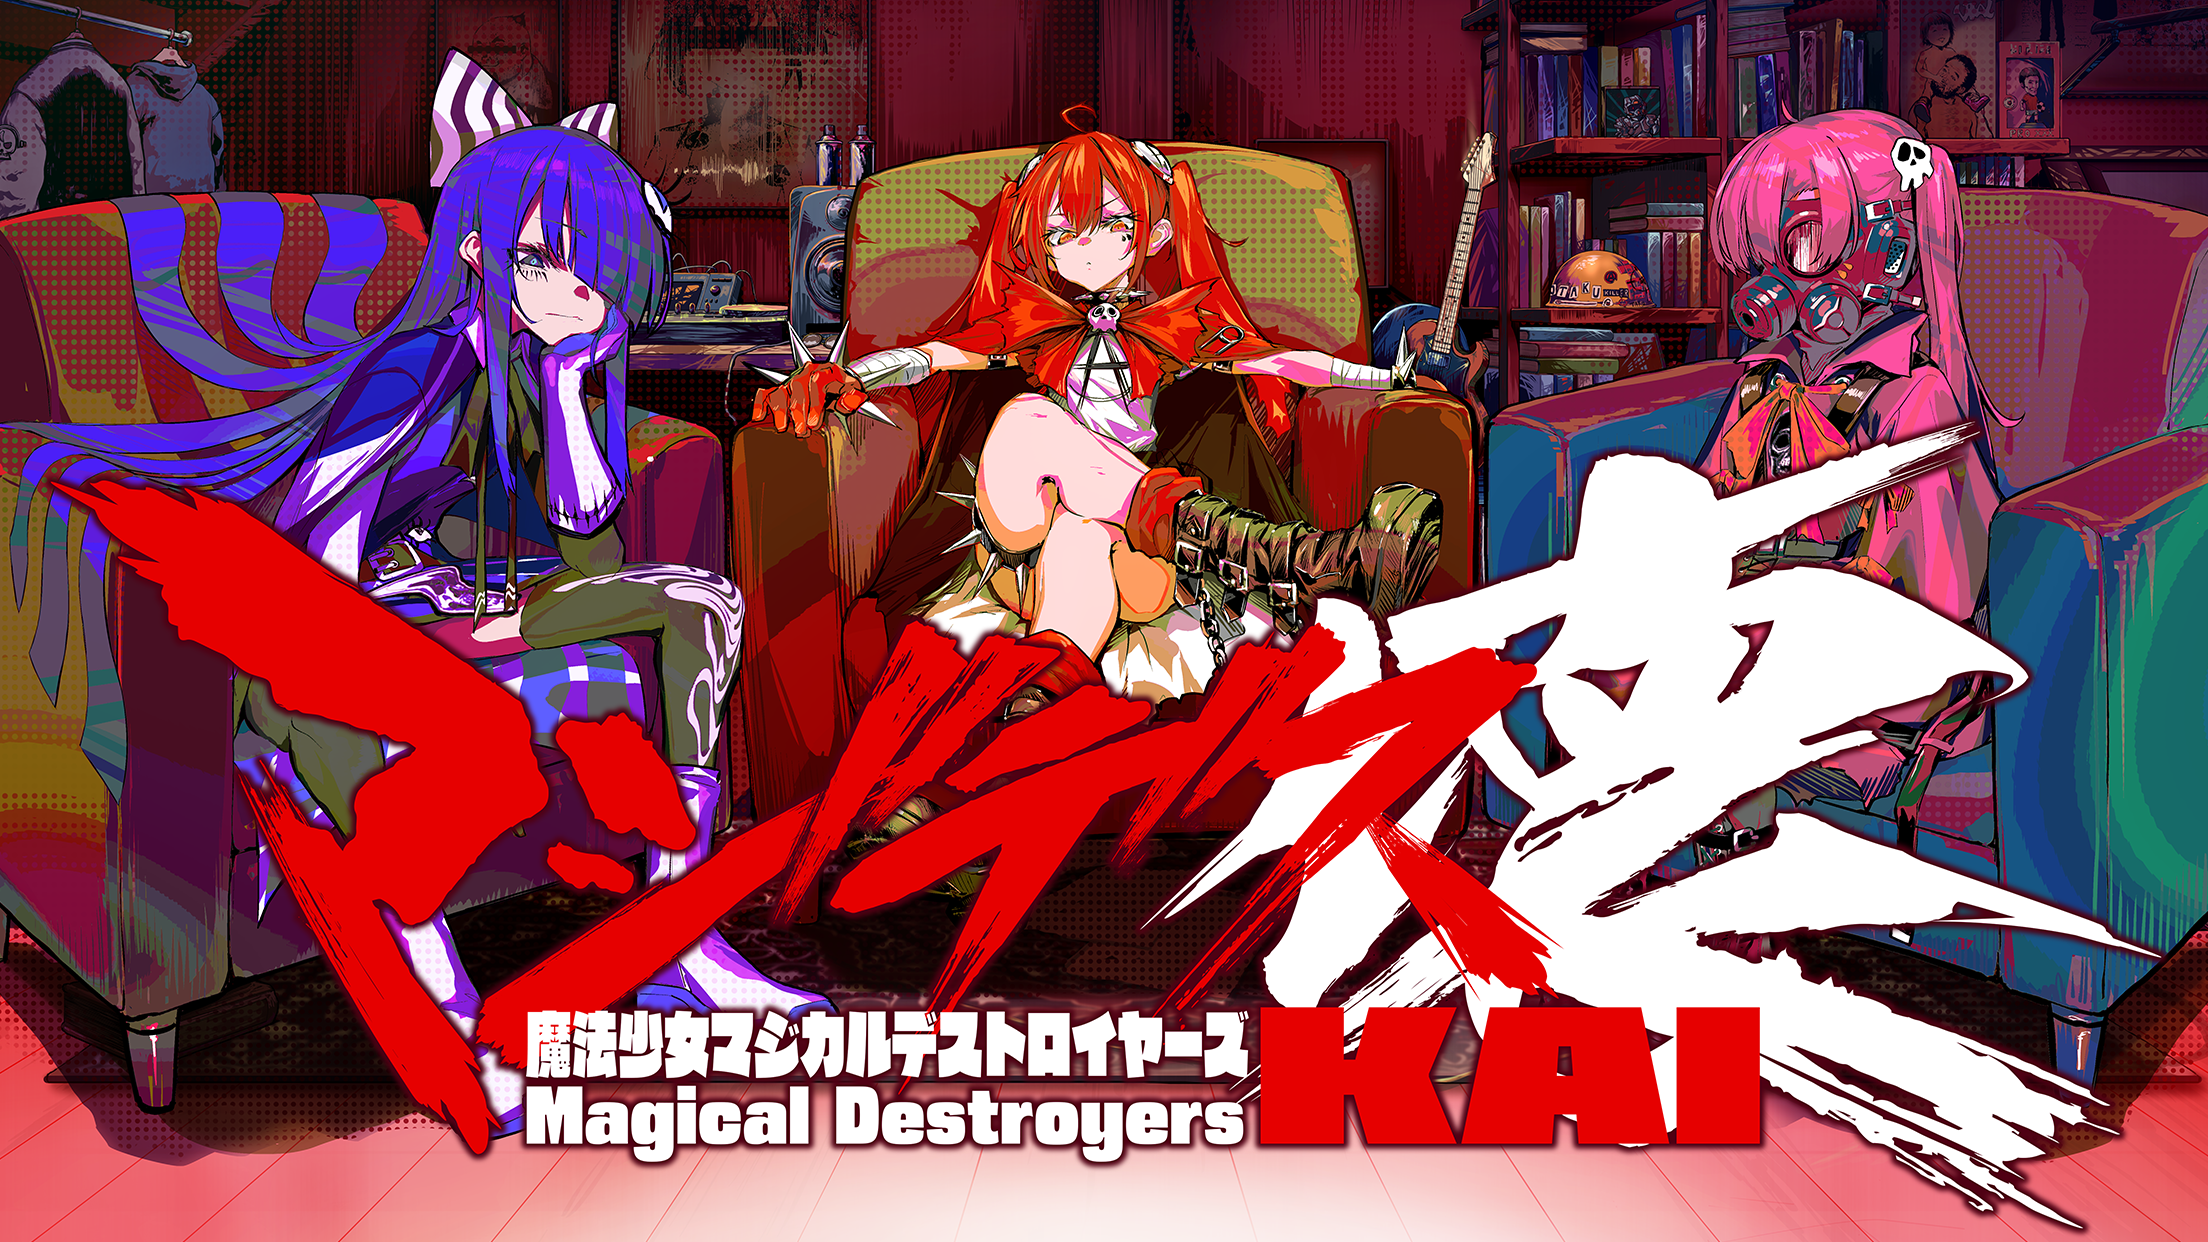 Screenshot 1 of Magides Kai Magical Girl Distruttori magici 1.4.0